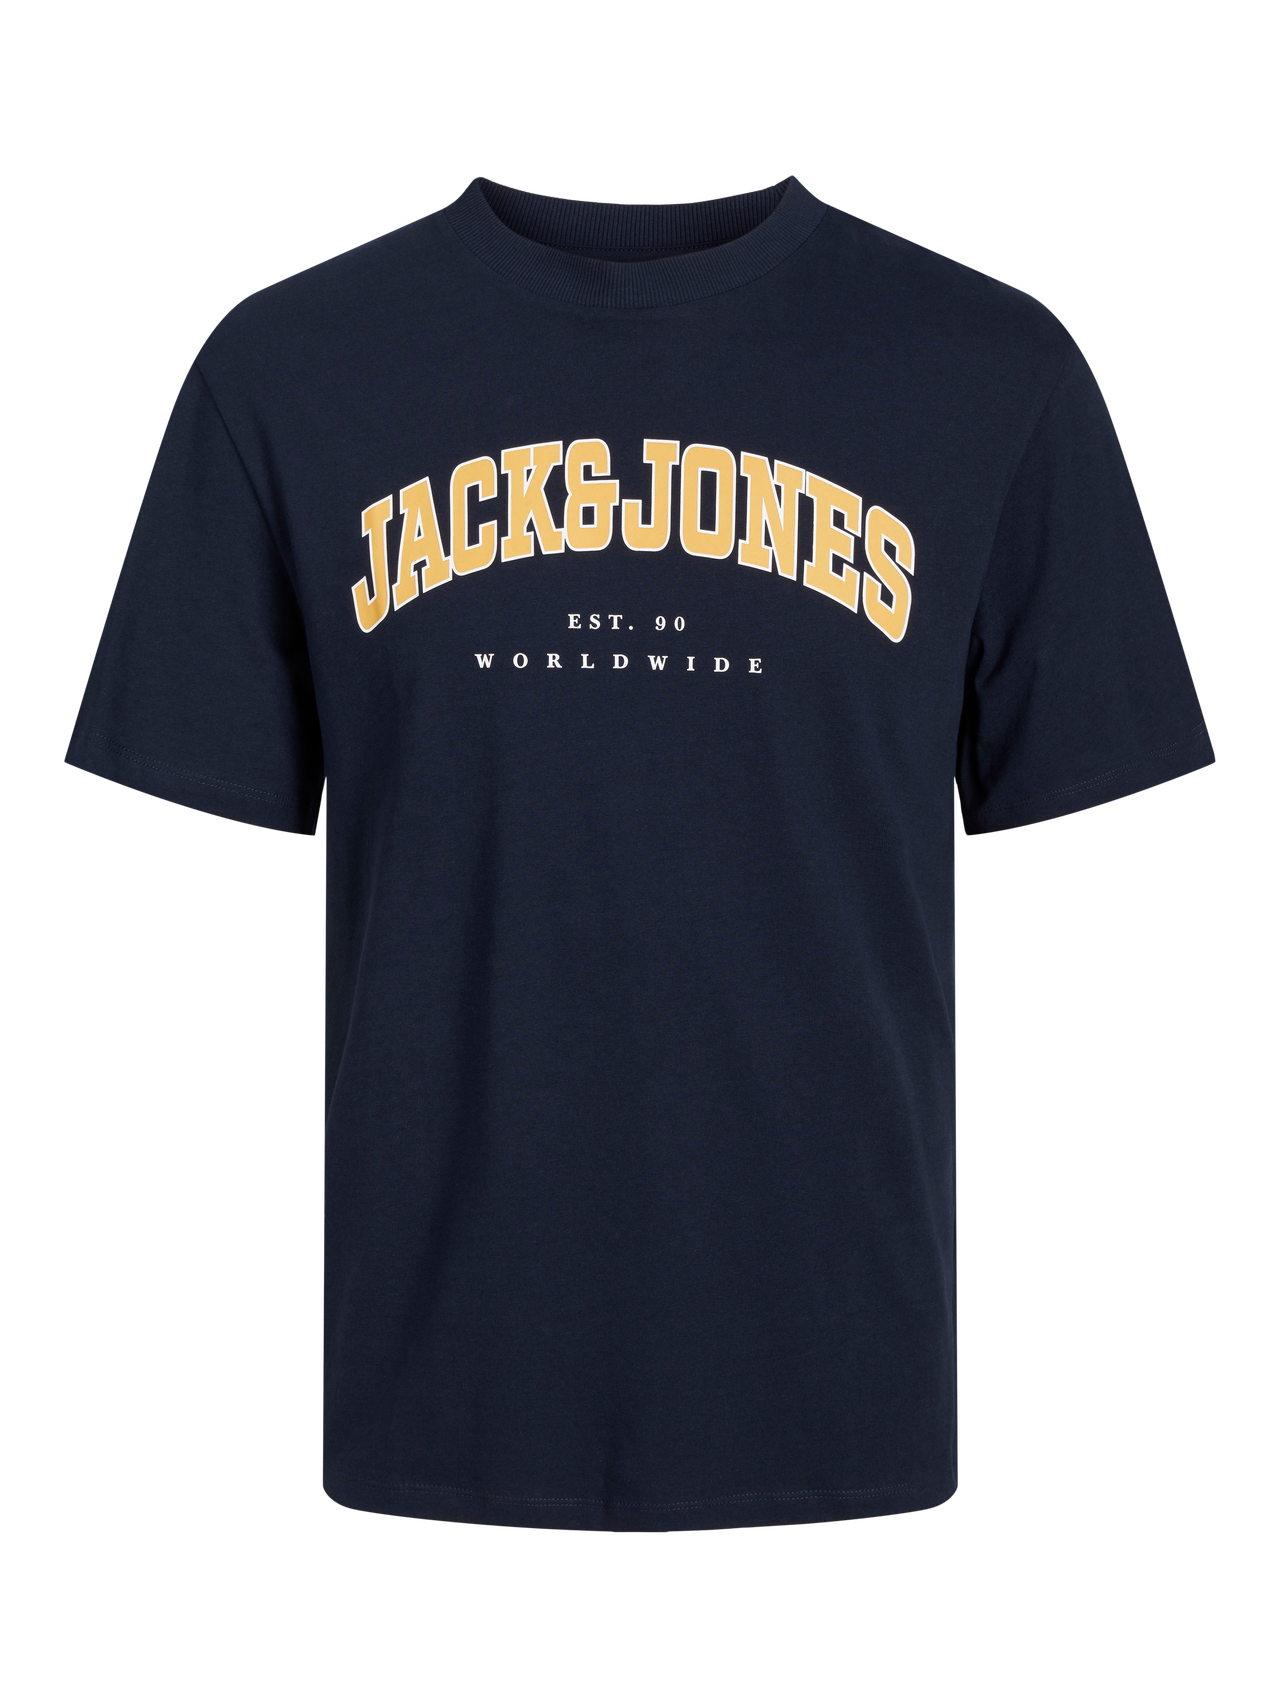 Jack & Jones T-shirt Logo Pour les garçons -Navy Blazer - 12258924